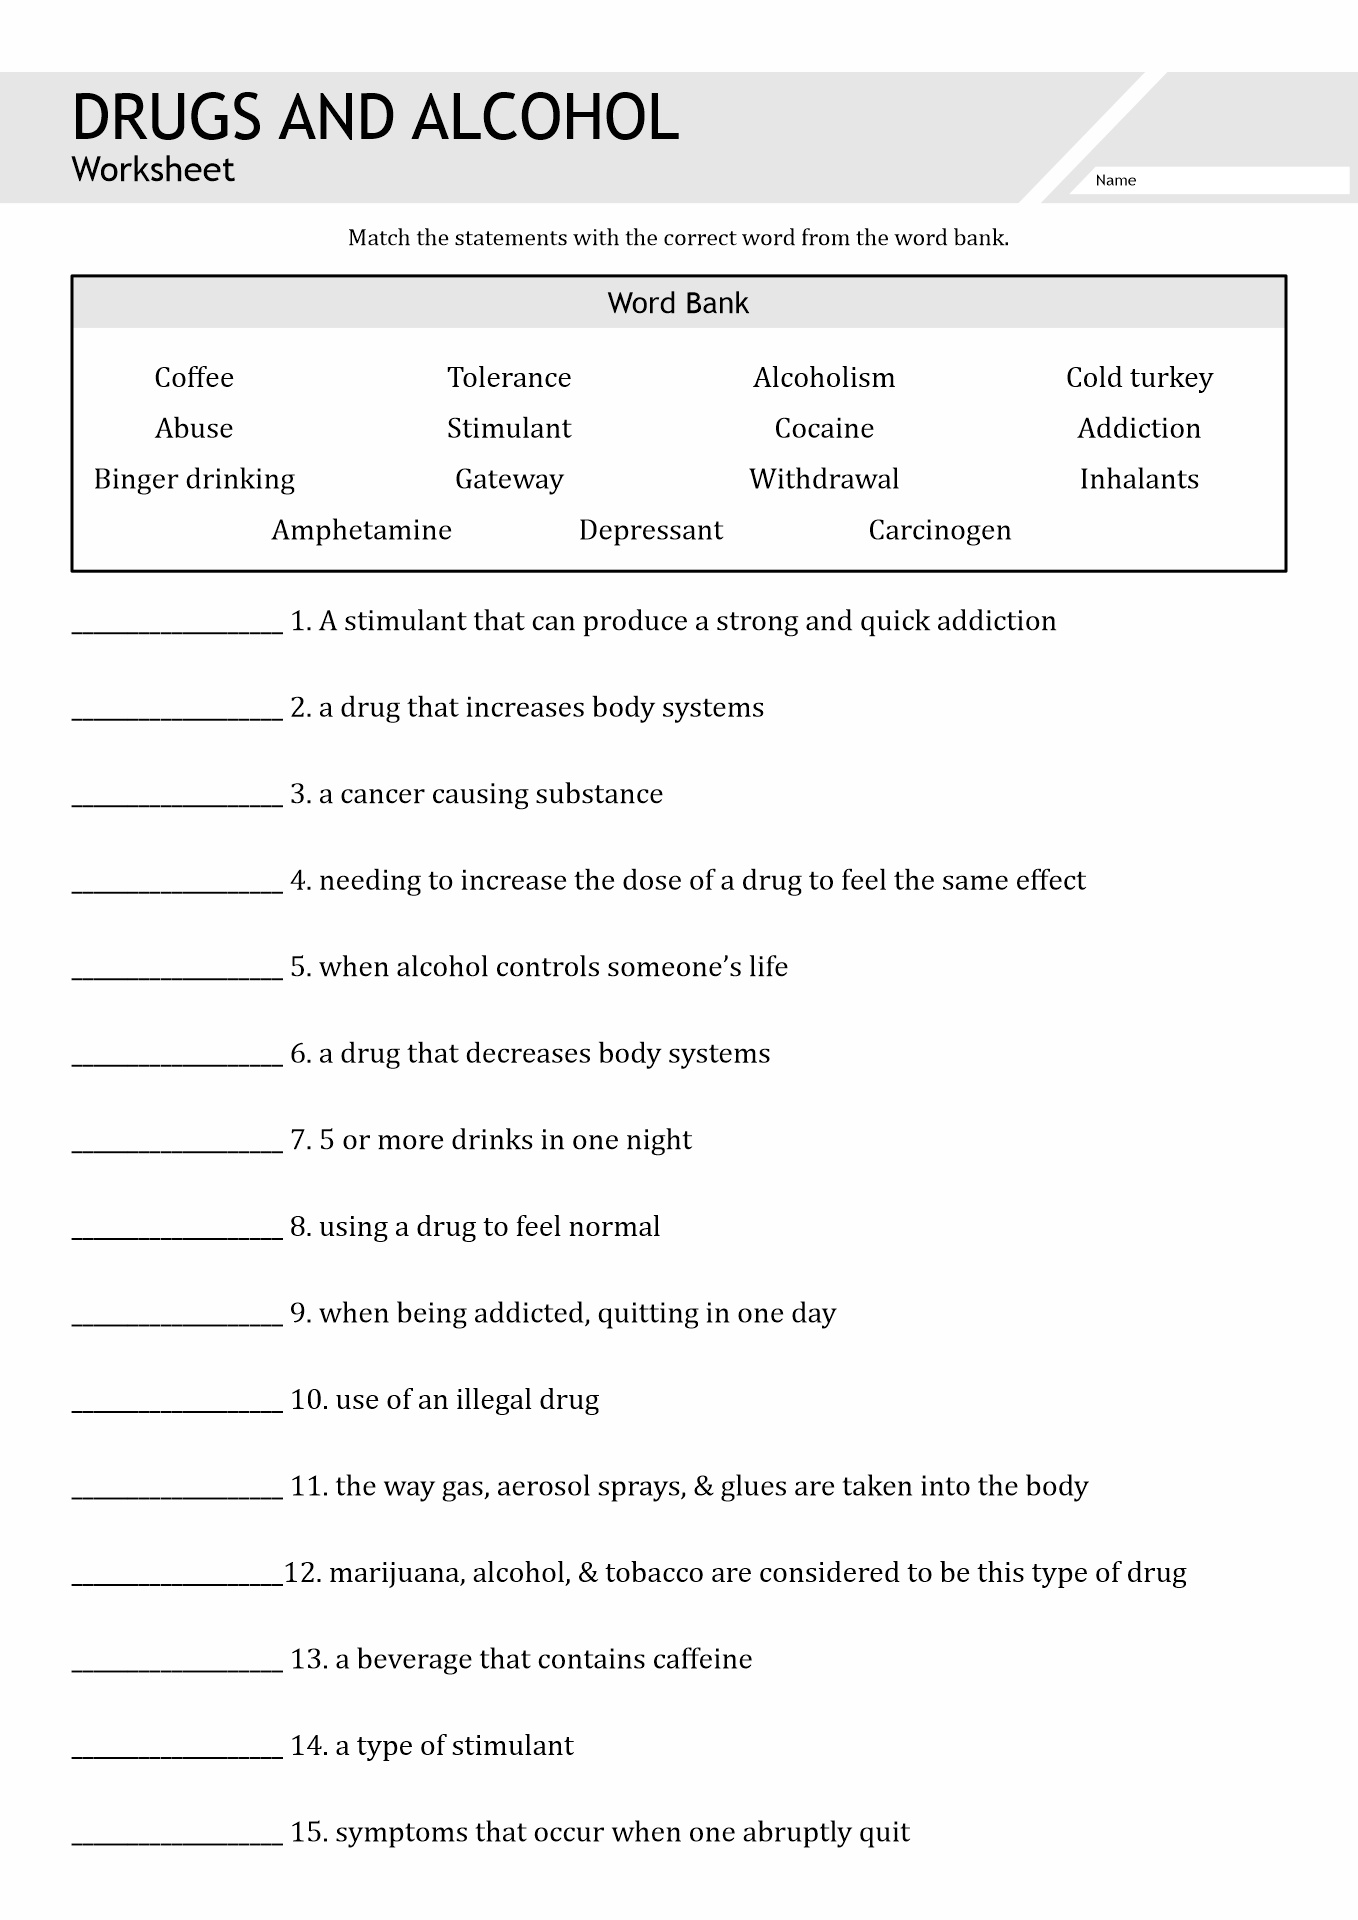 Drug and Alcohol Worksheets Image